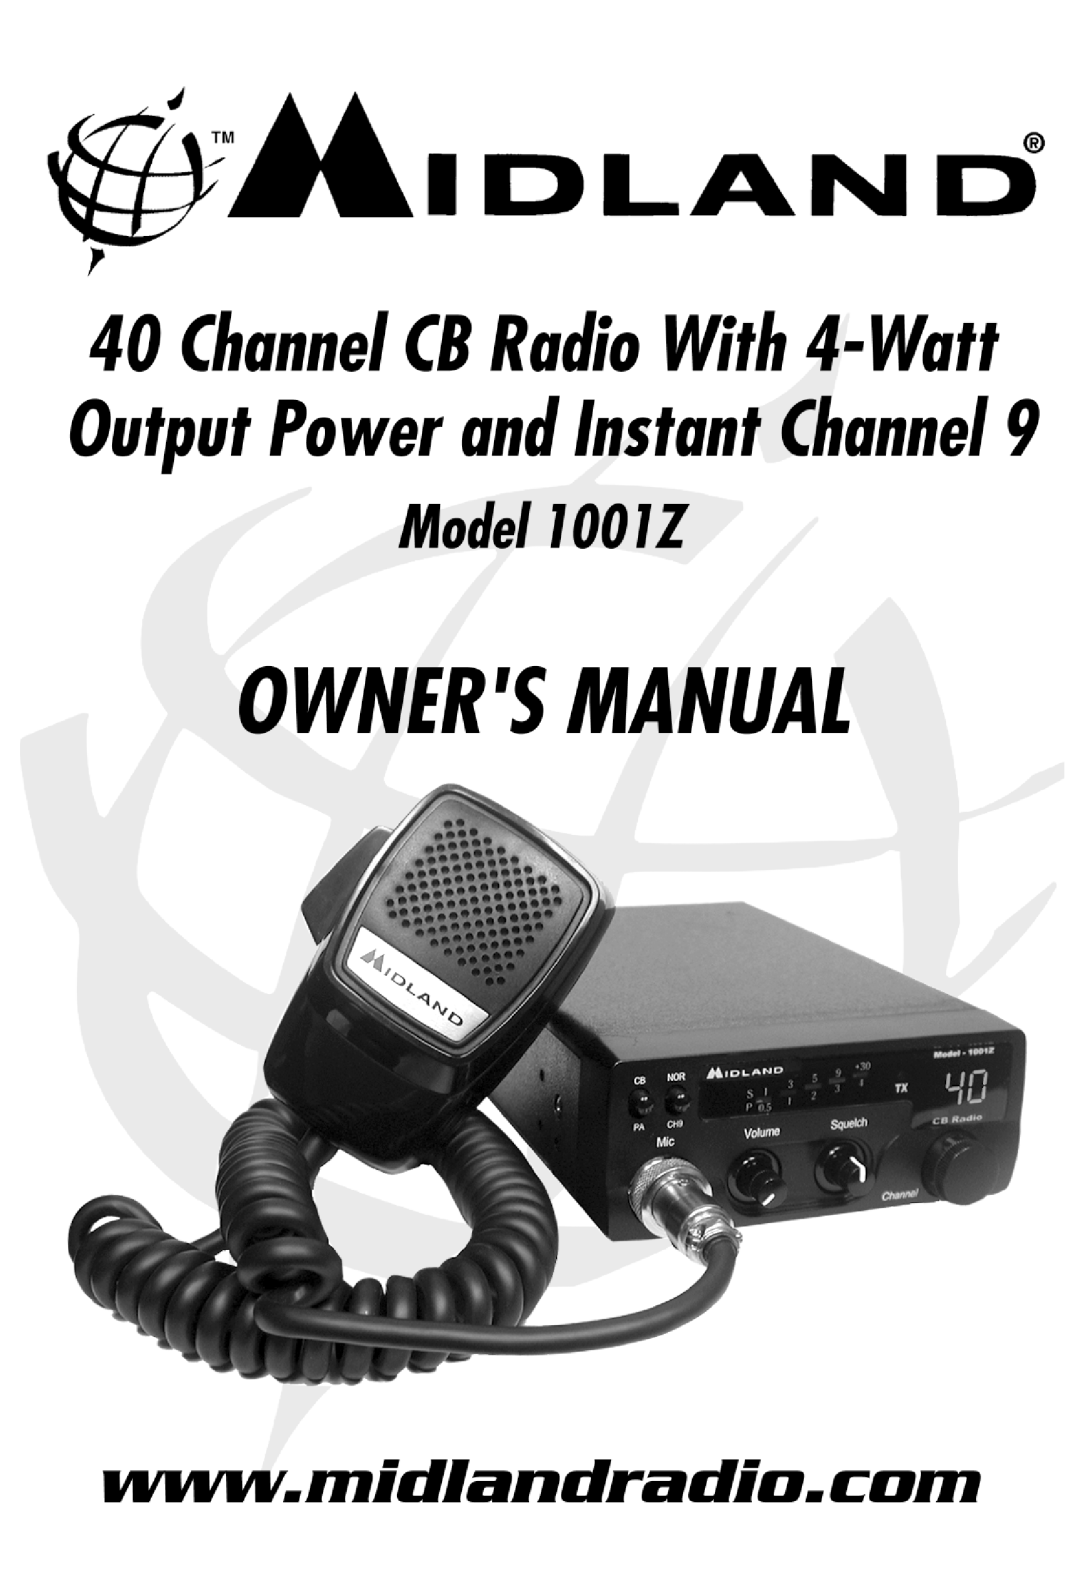 Midland Radio 40 Channel CB Radio with 4-Watt Output Power owner manual Model 1001z, with 4-WattOutput Power 